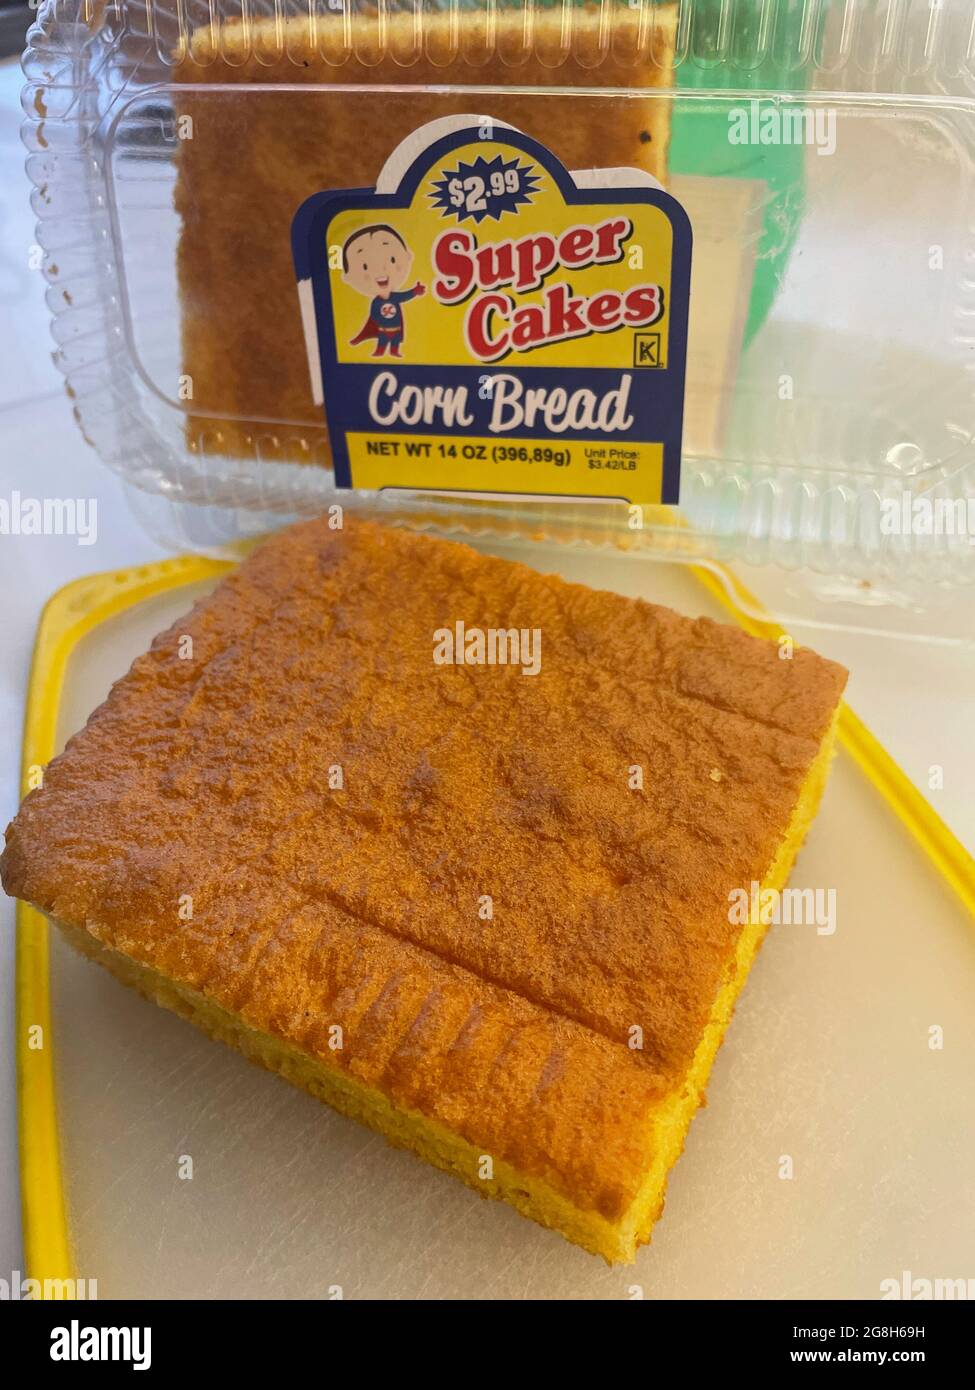 Super Cakes Maíz Bread vende por $2,99 , Estados Unidos Foto de stock